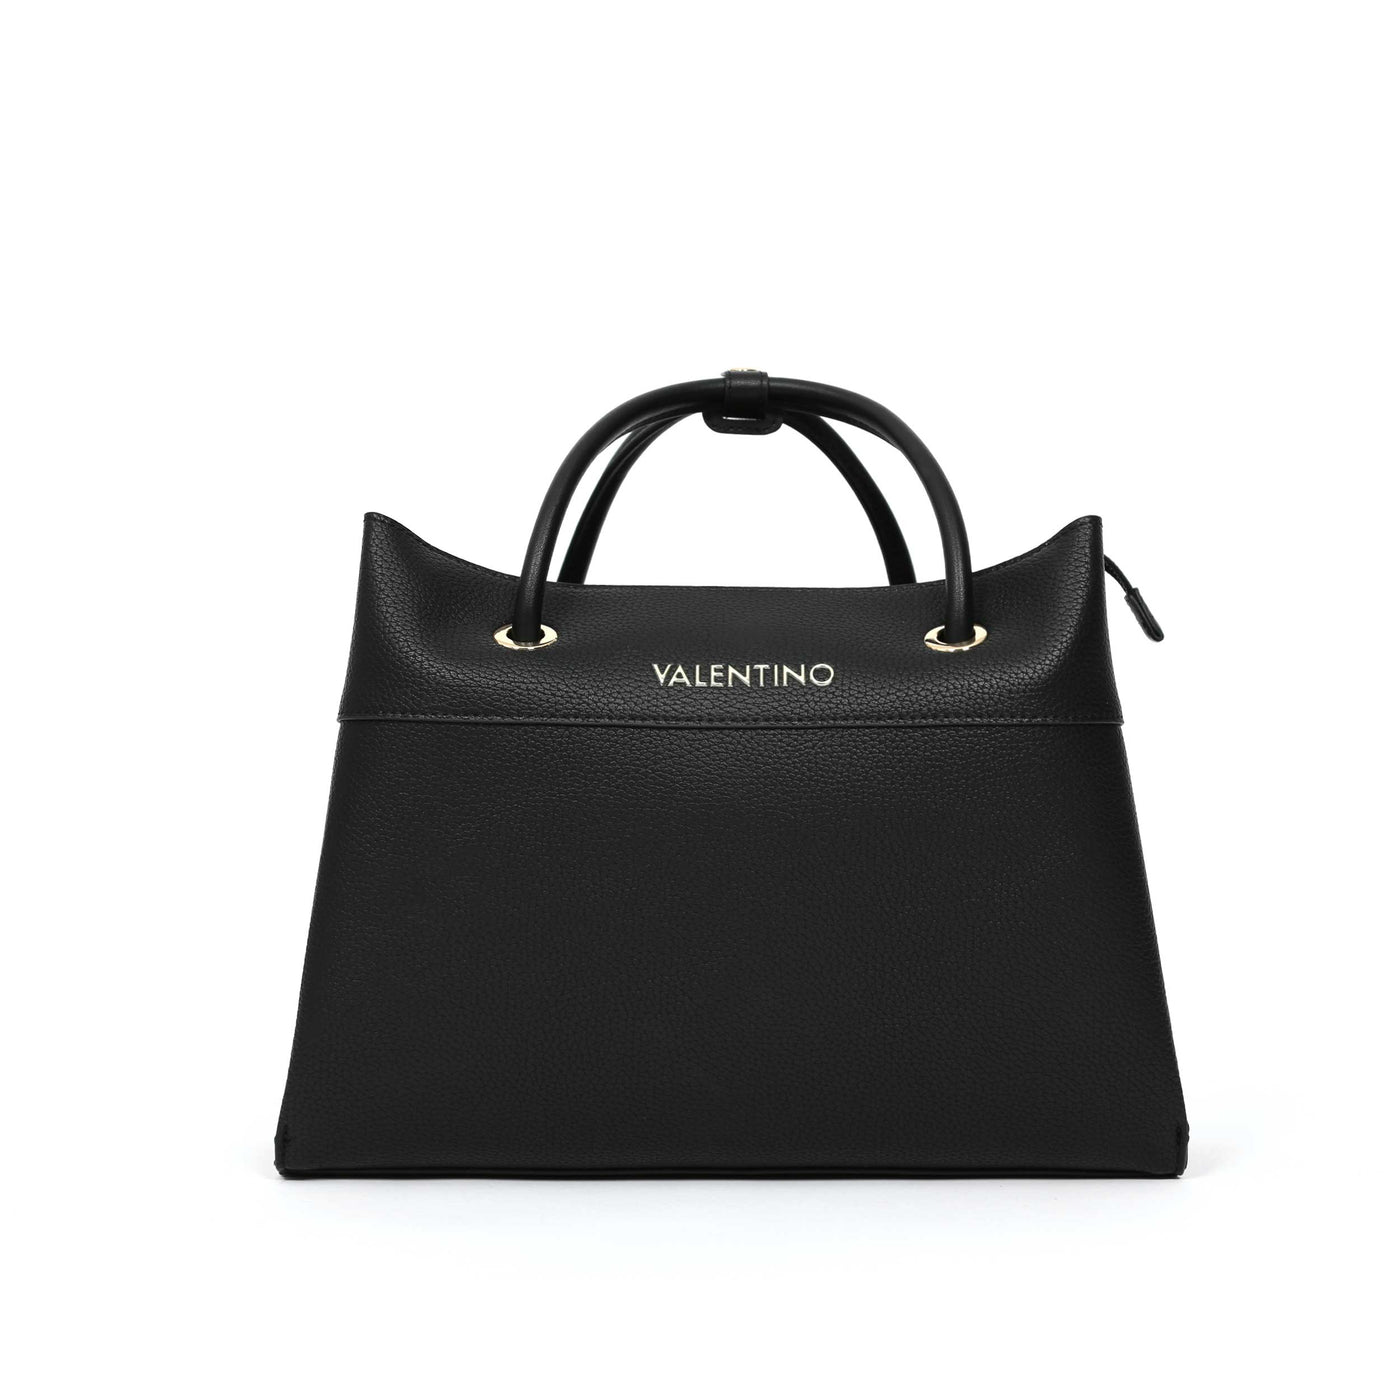 Valentino Bags AlexiaLadies Tote Bag in Black Main